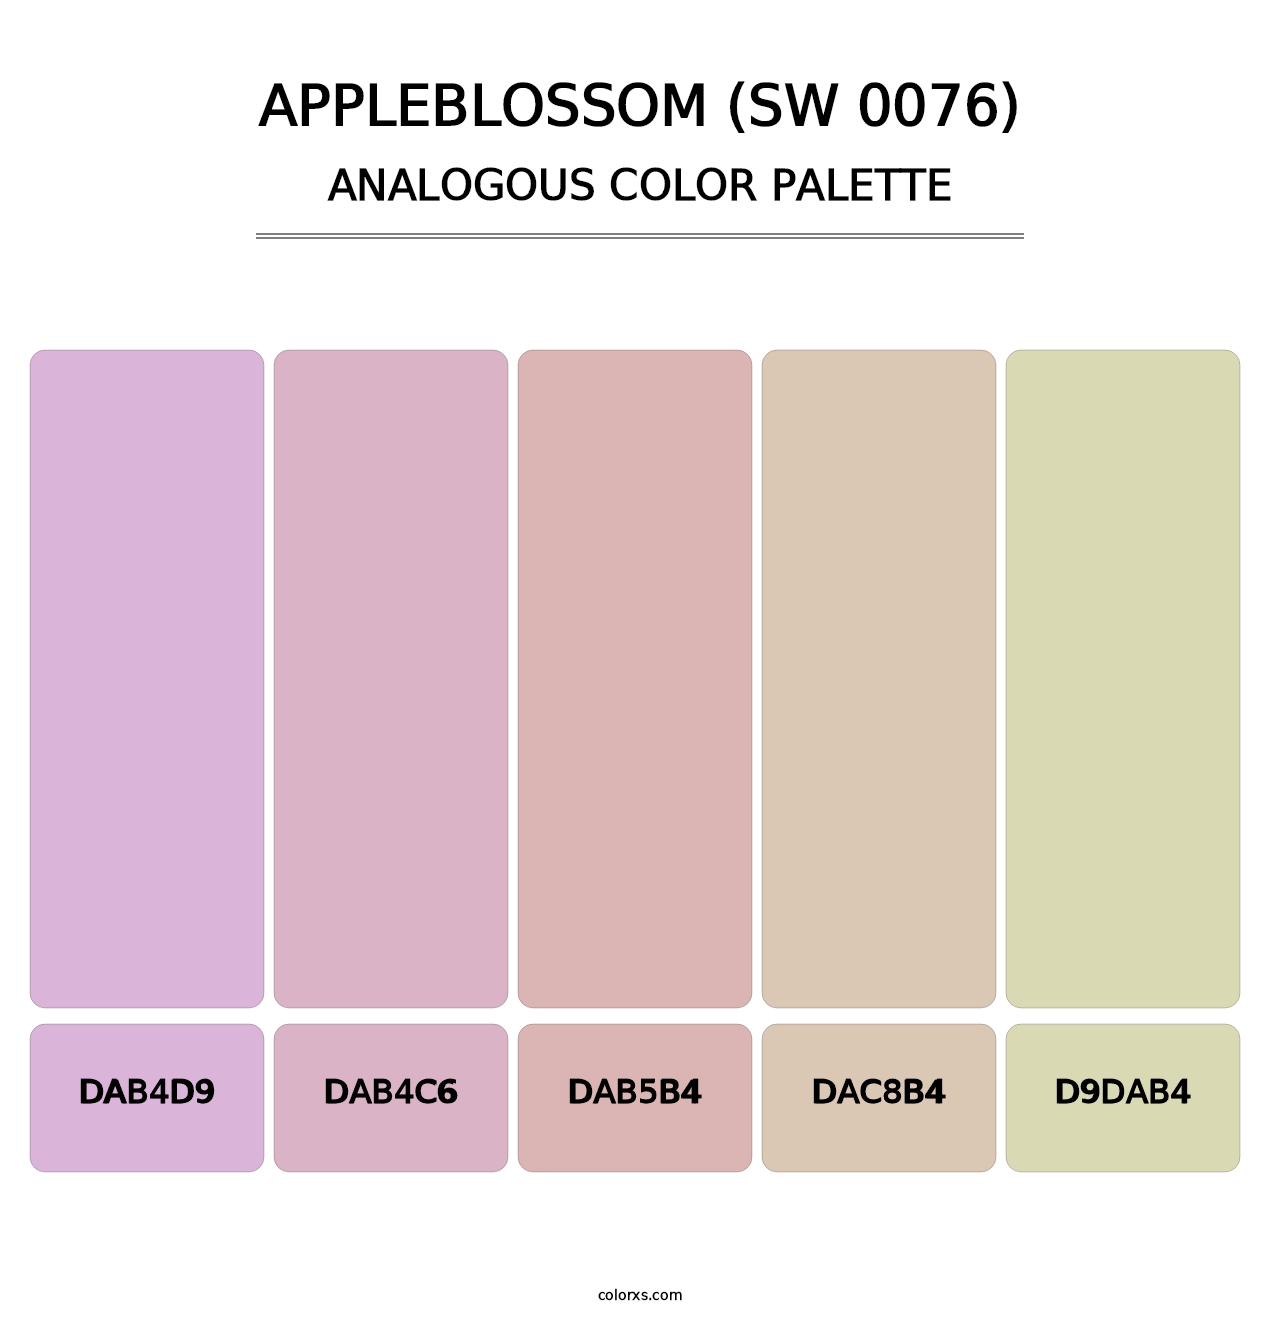 Appleblossom (SW 0076) - Analogous Color Palette